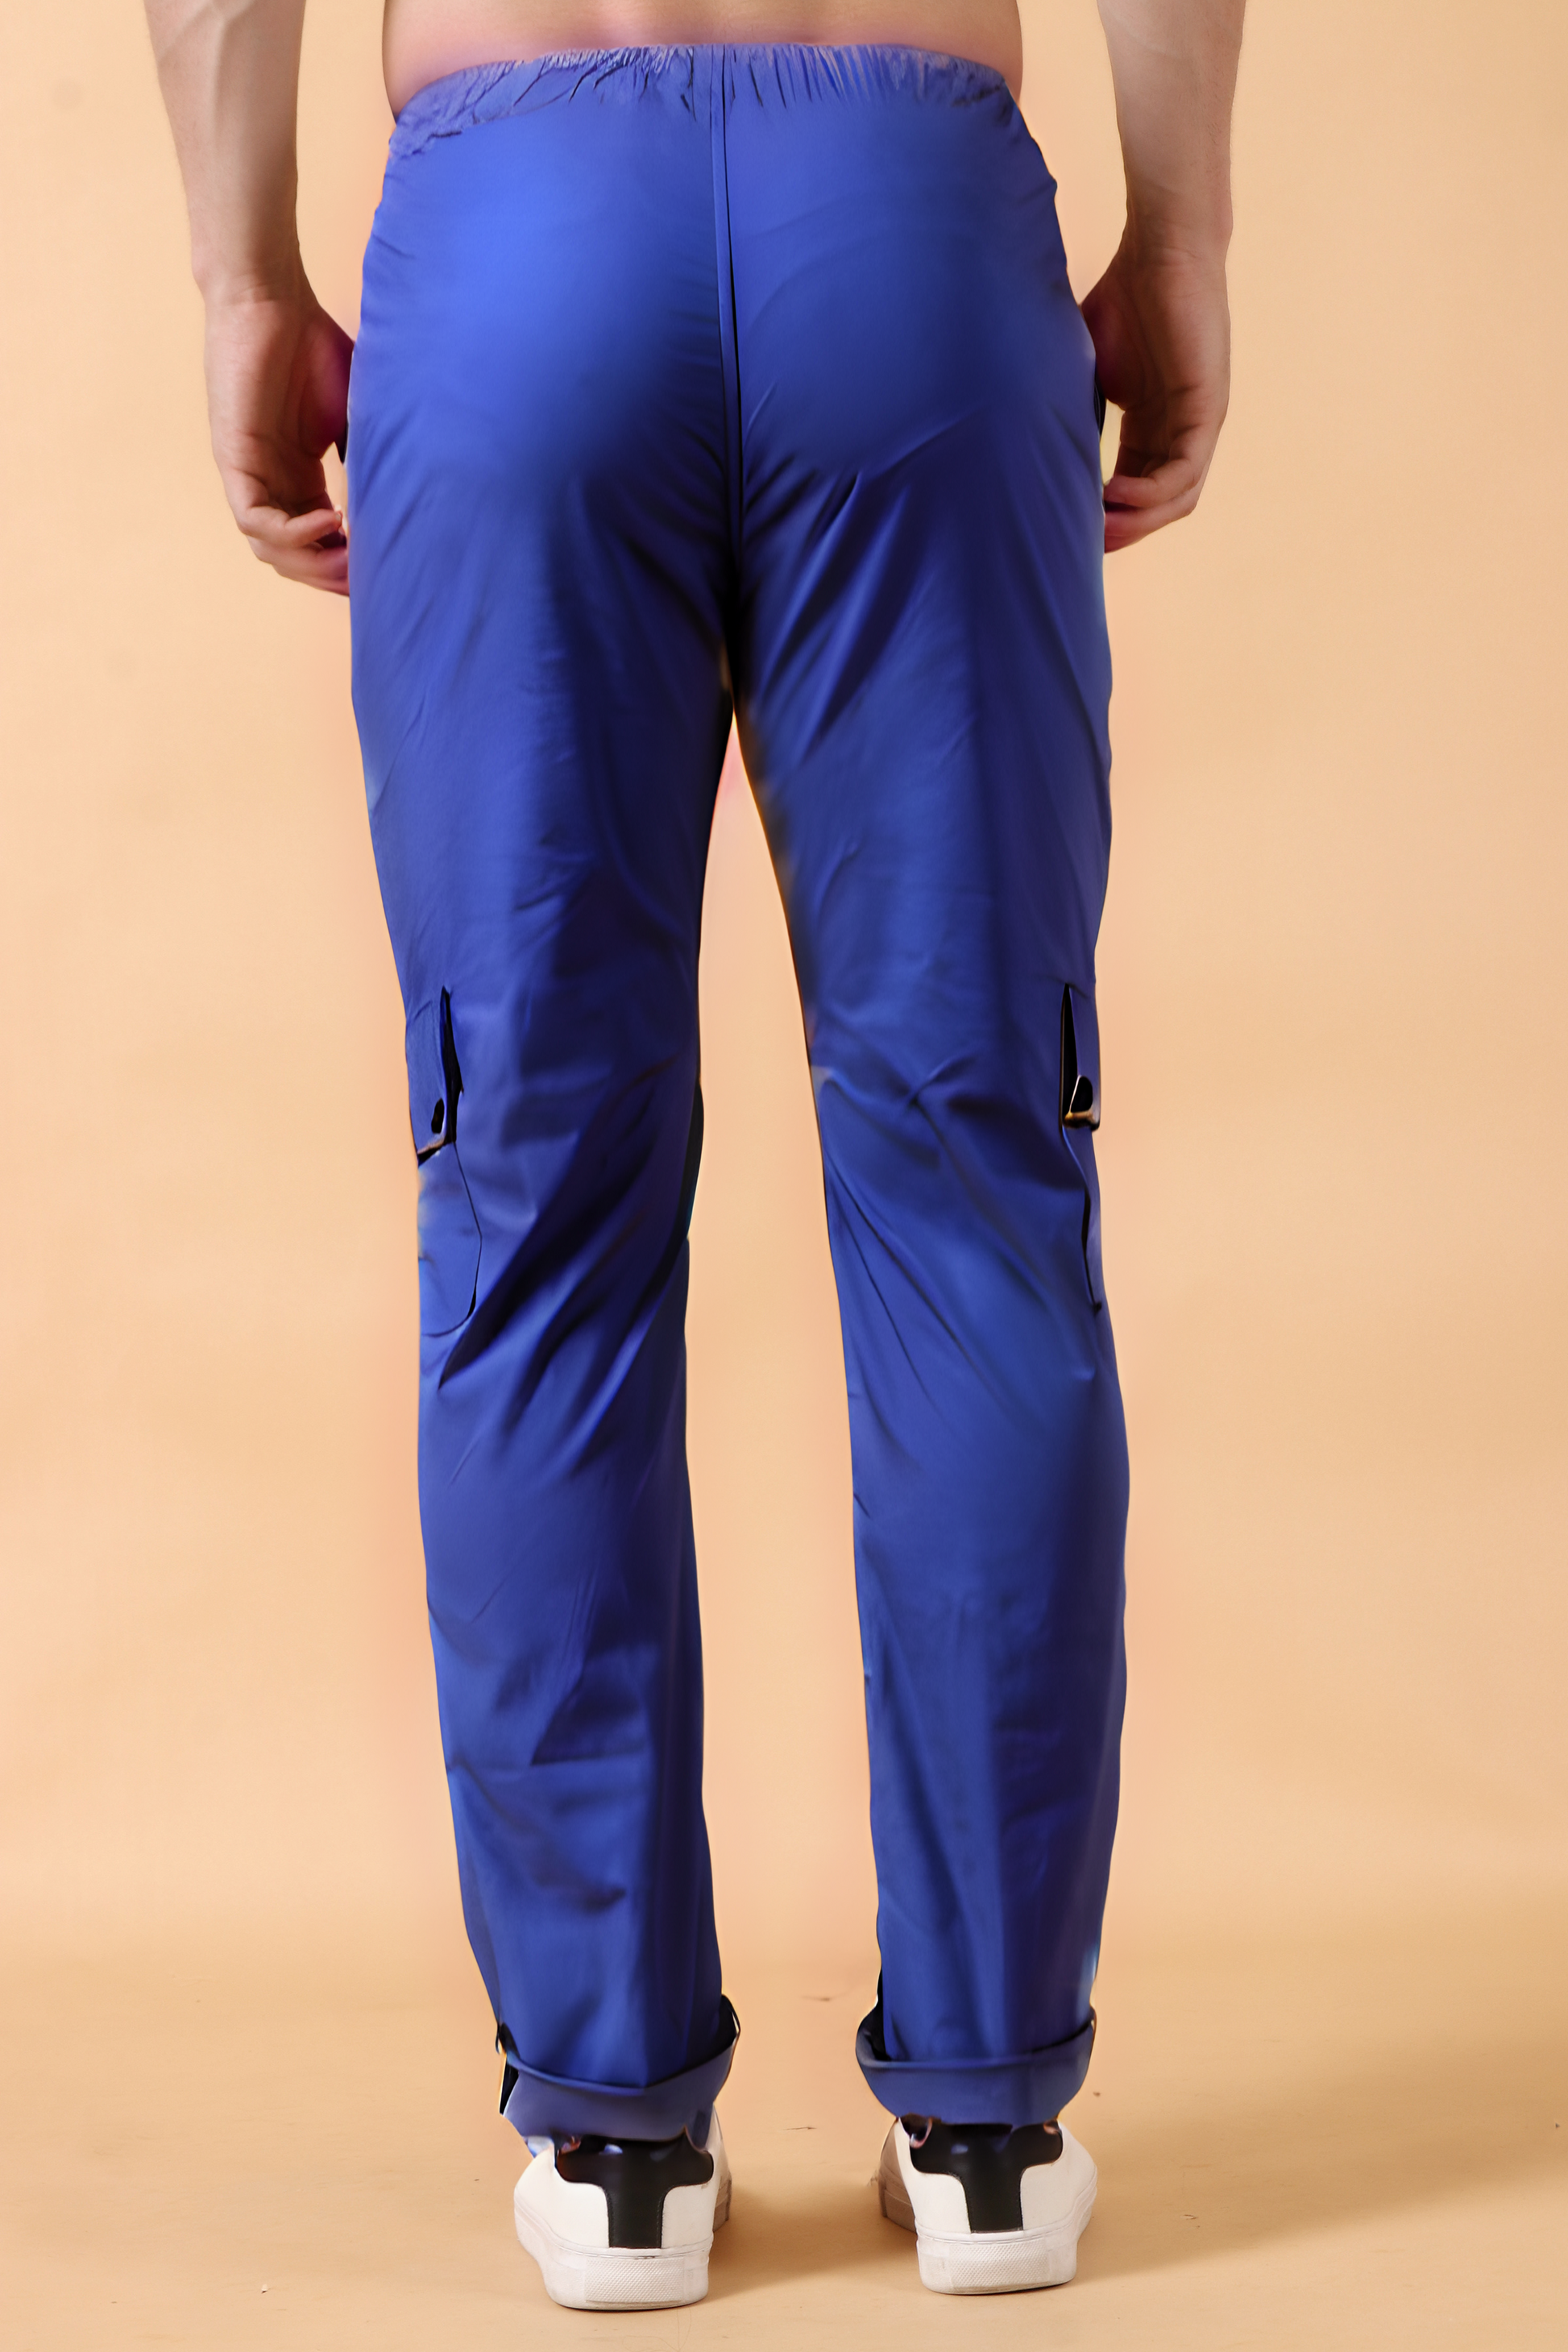 Firoji Color Men's Casual Lycra Pants Stretchable Less Weight Lycra Pants  for Men